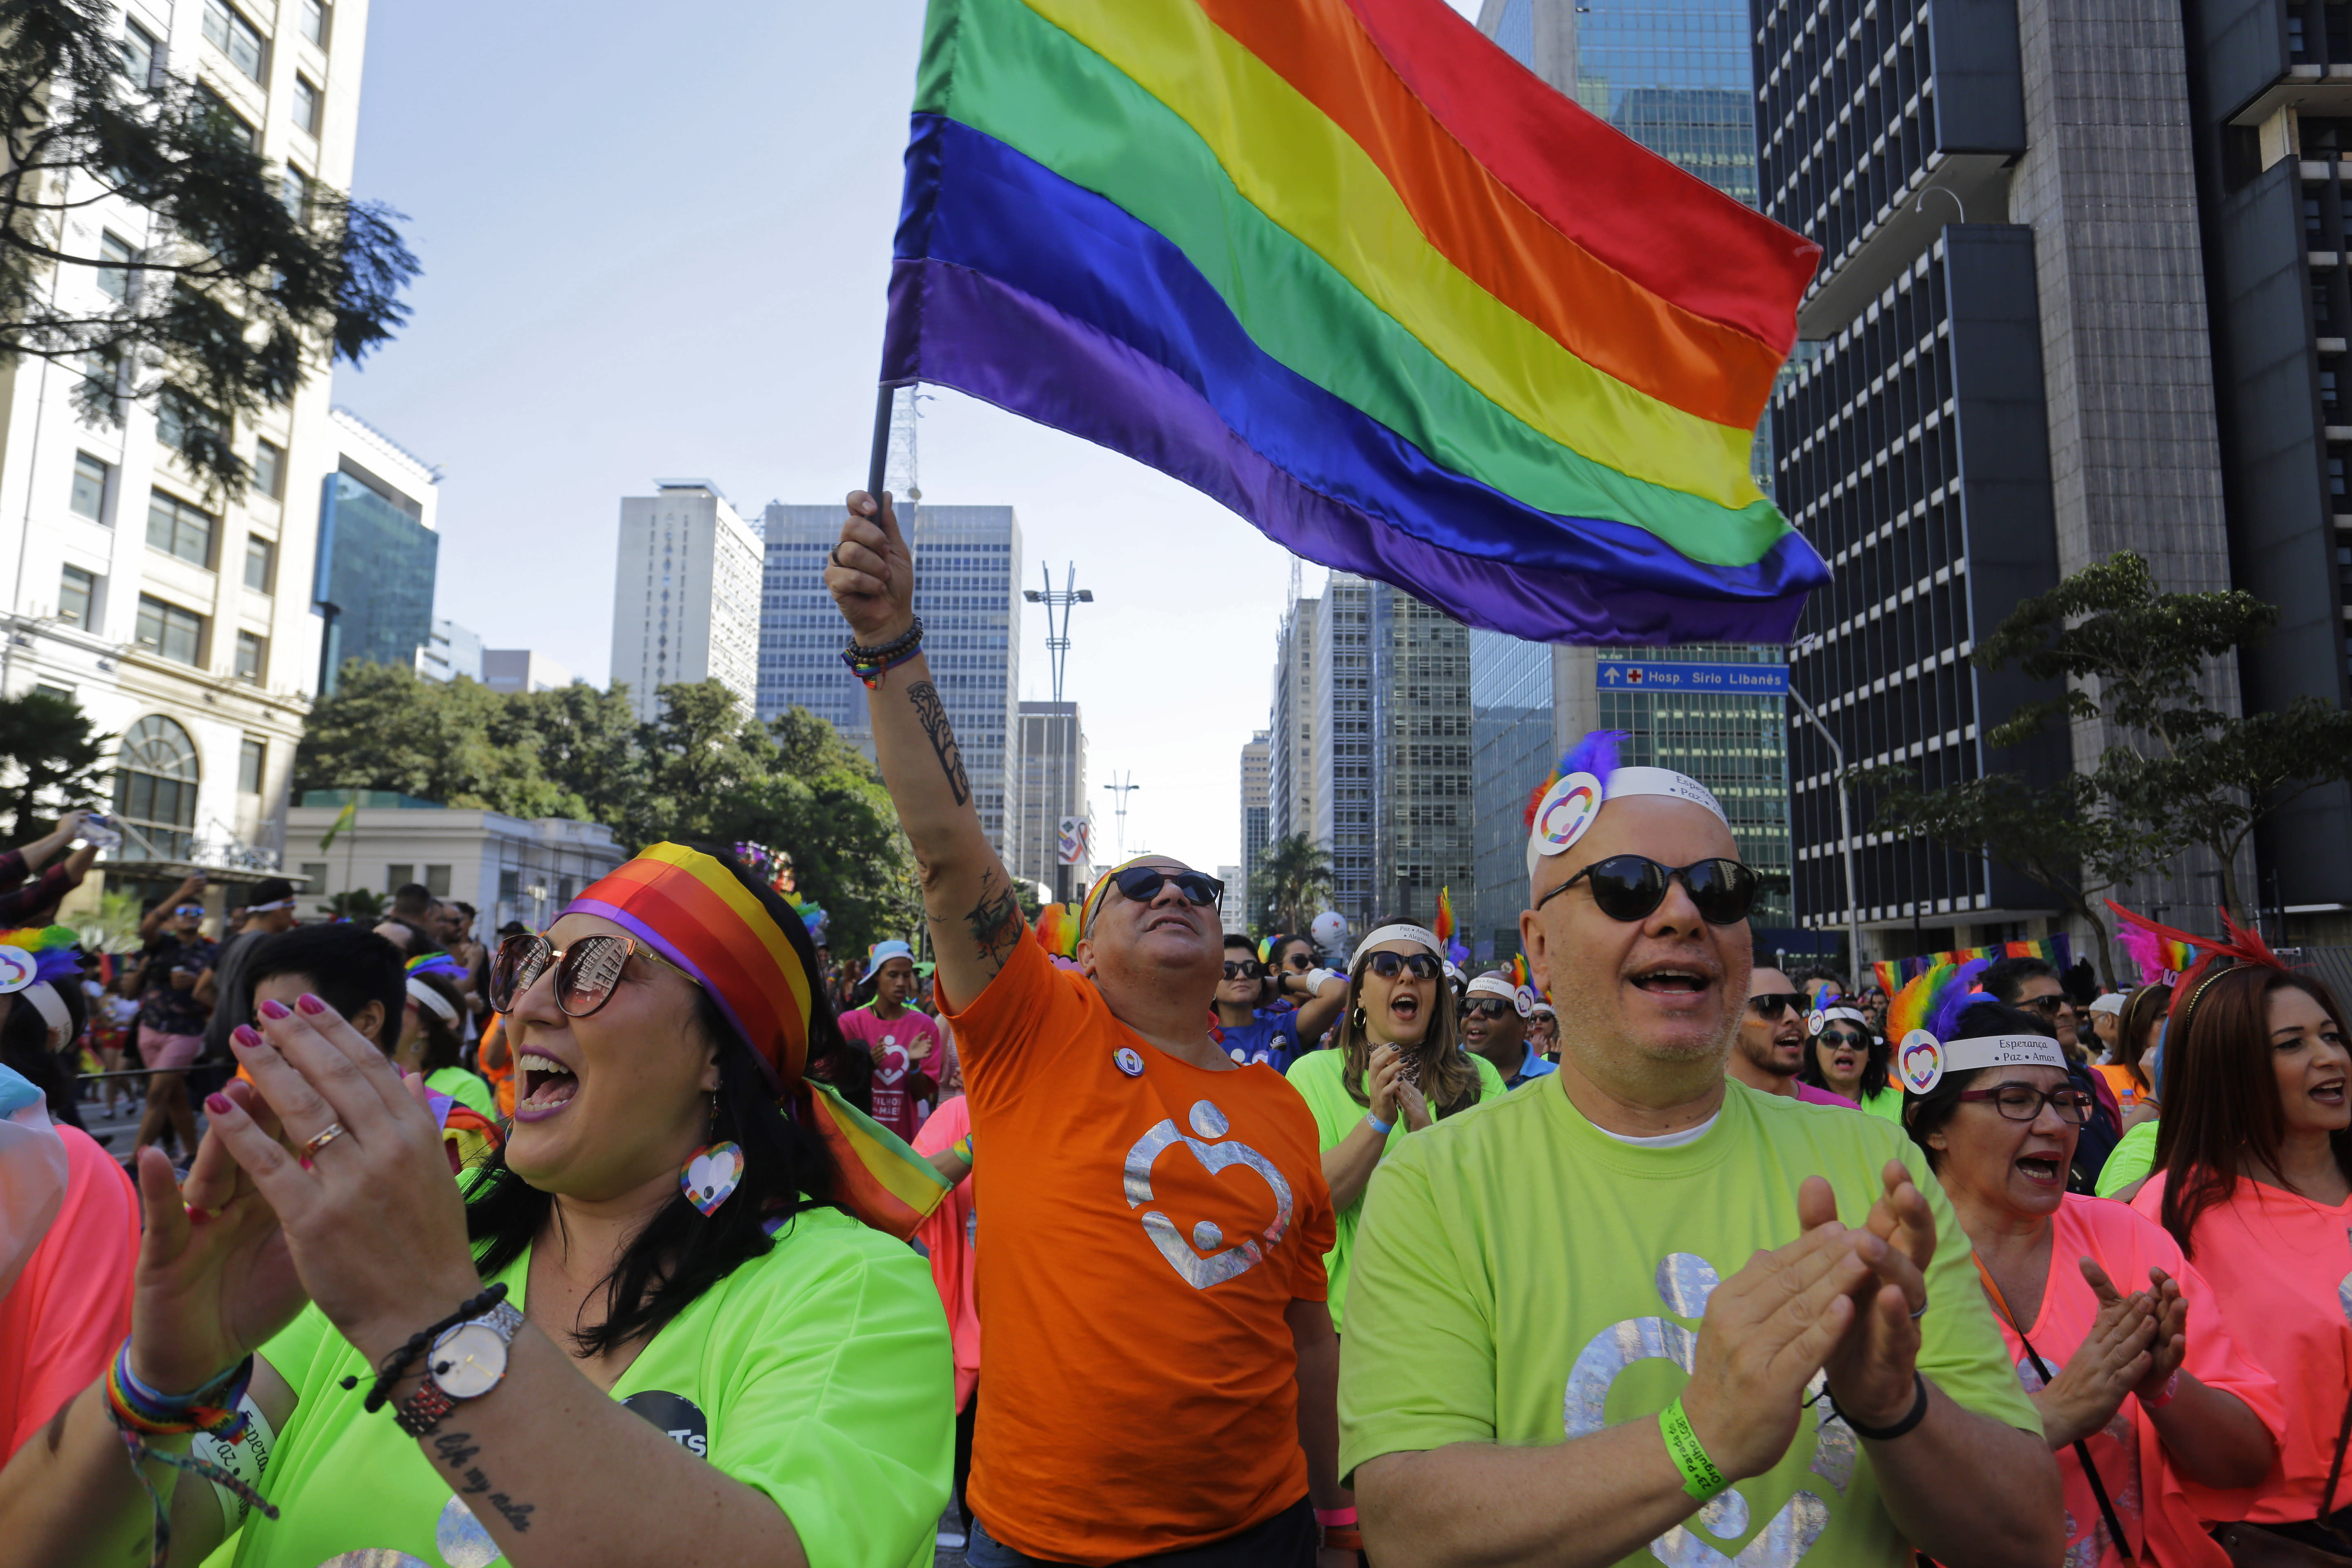 Huge crowds for LGBT pride parade in Brazil's biggest city